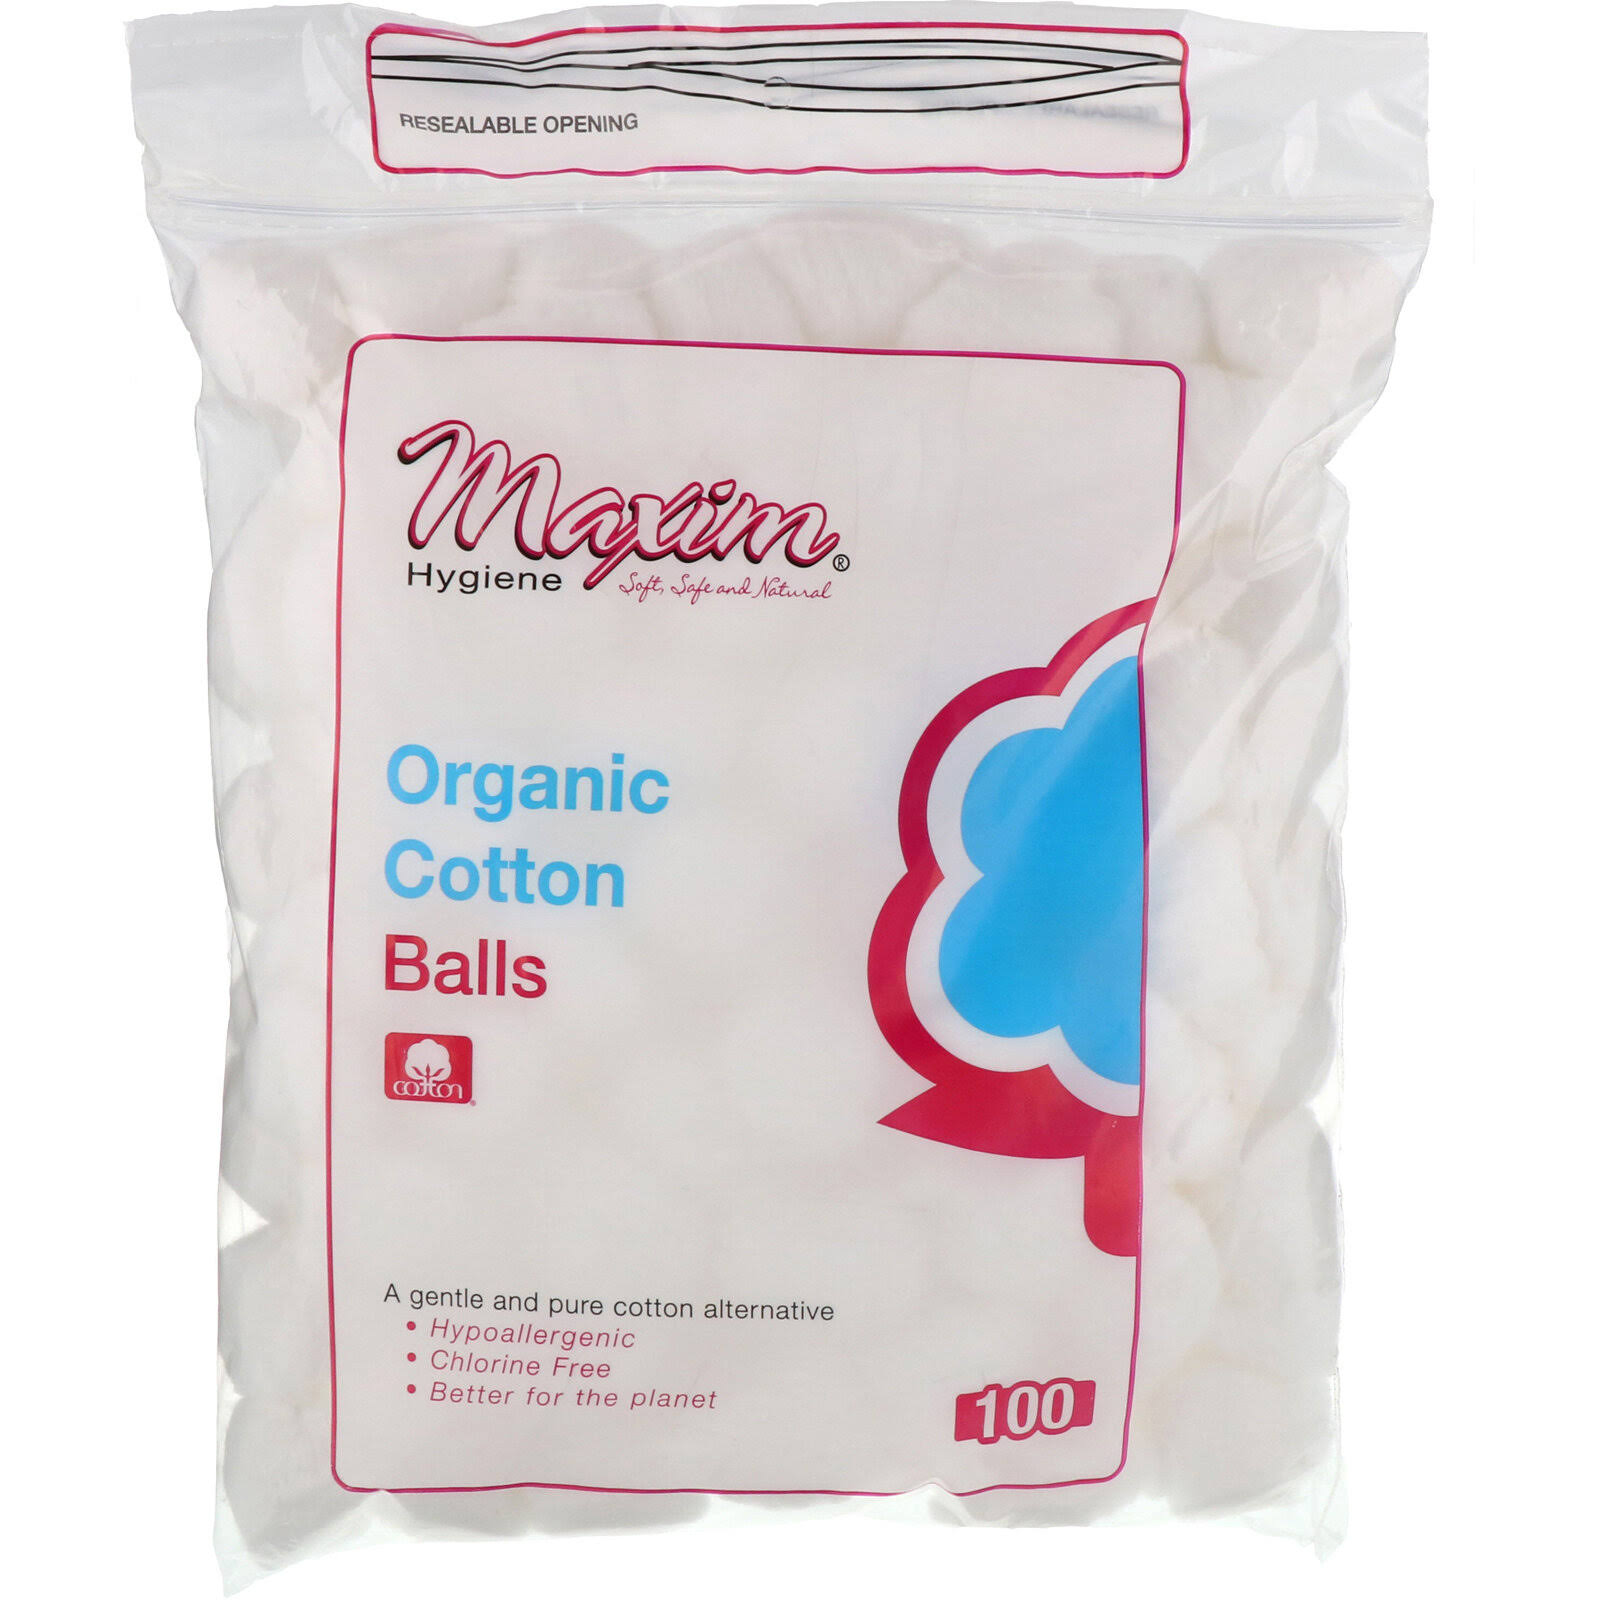 Maxim Hygiene Organic Cotton Balls - 100 Pack